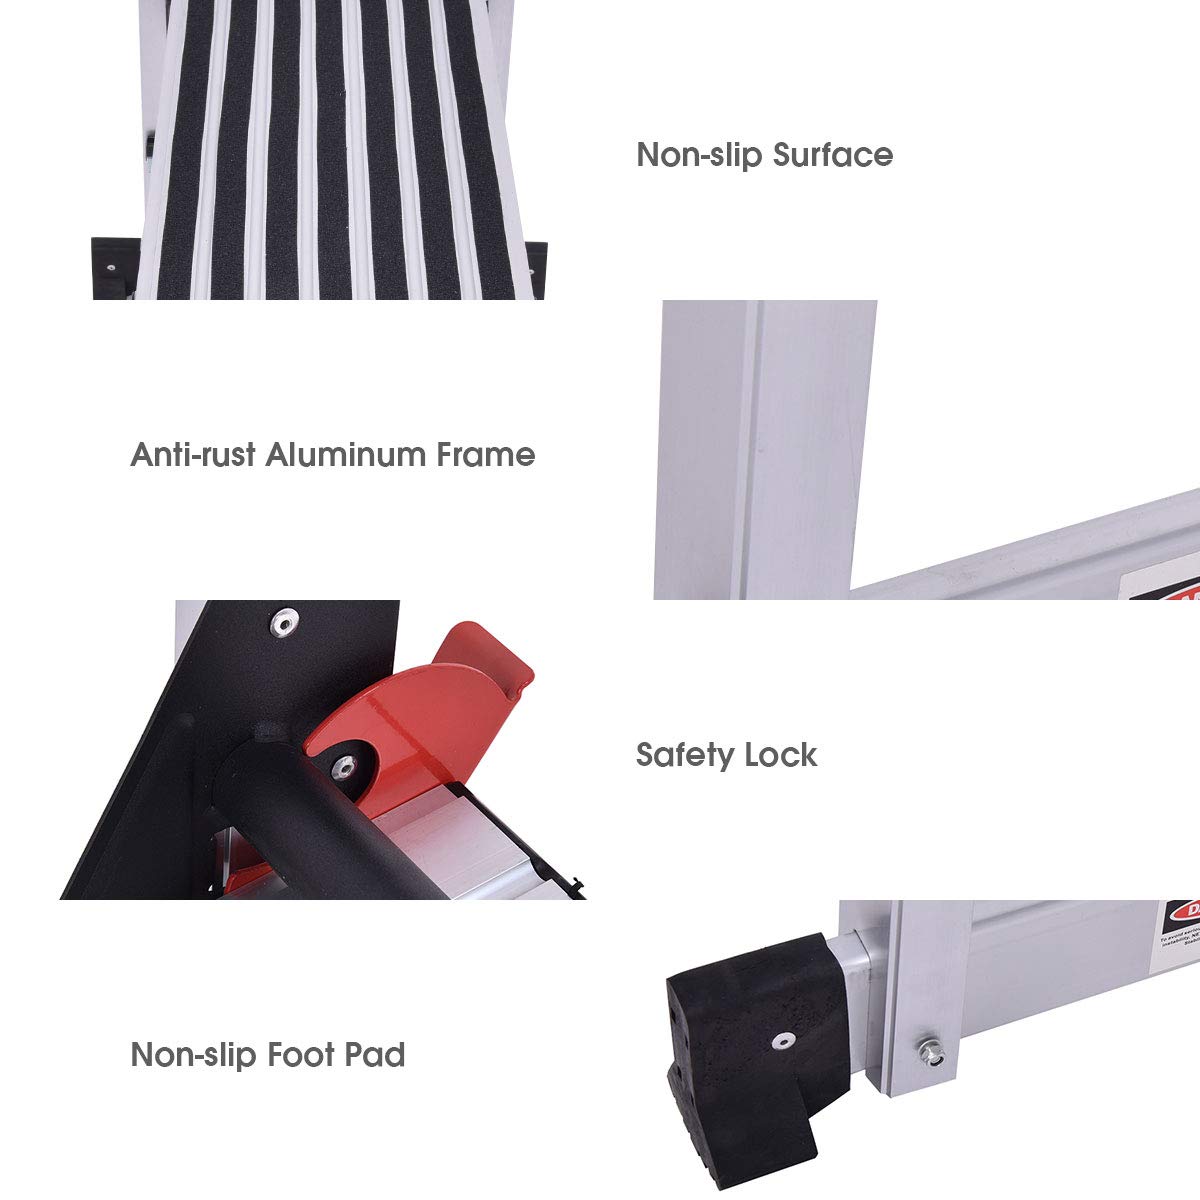 Giantex Aluminum Platform Non-Slip Folding Work Bench Drywall Stool Ladder 330lbs Capacity